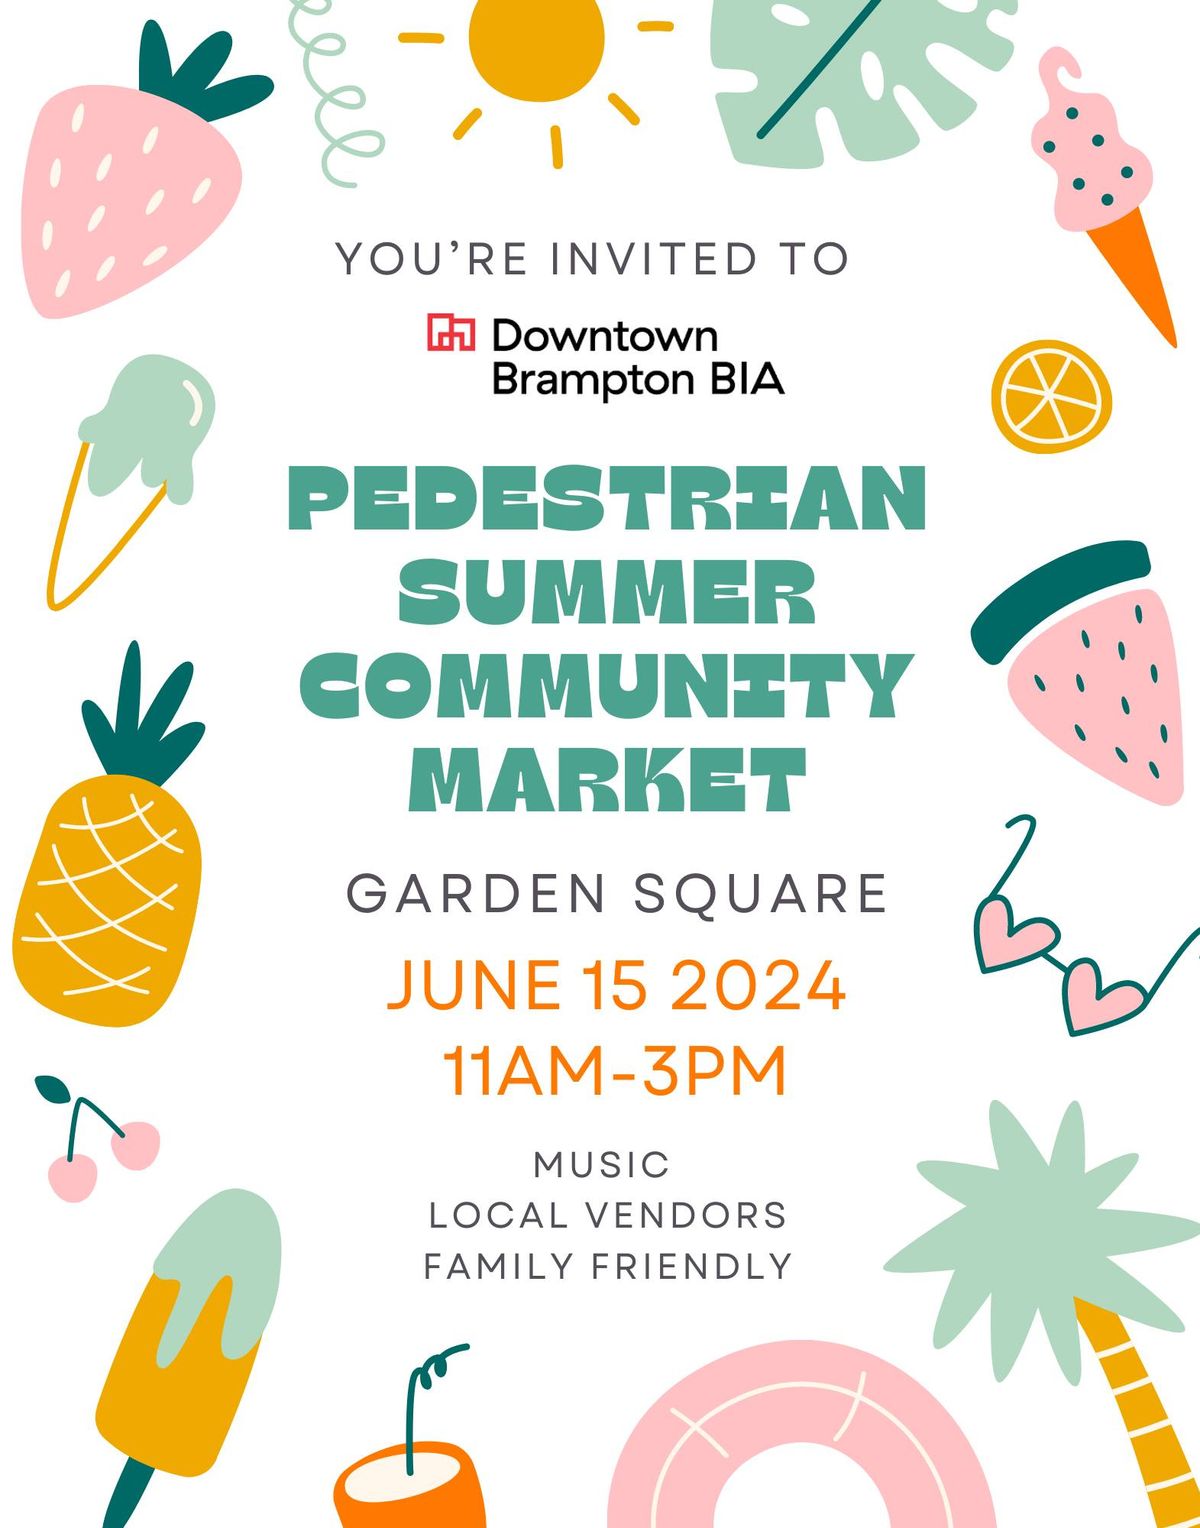 Pedestrian Summer Community Market hosted by DT Brampton BIA